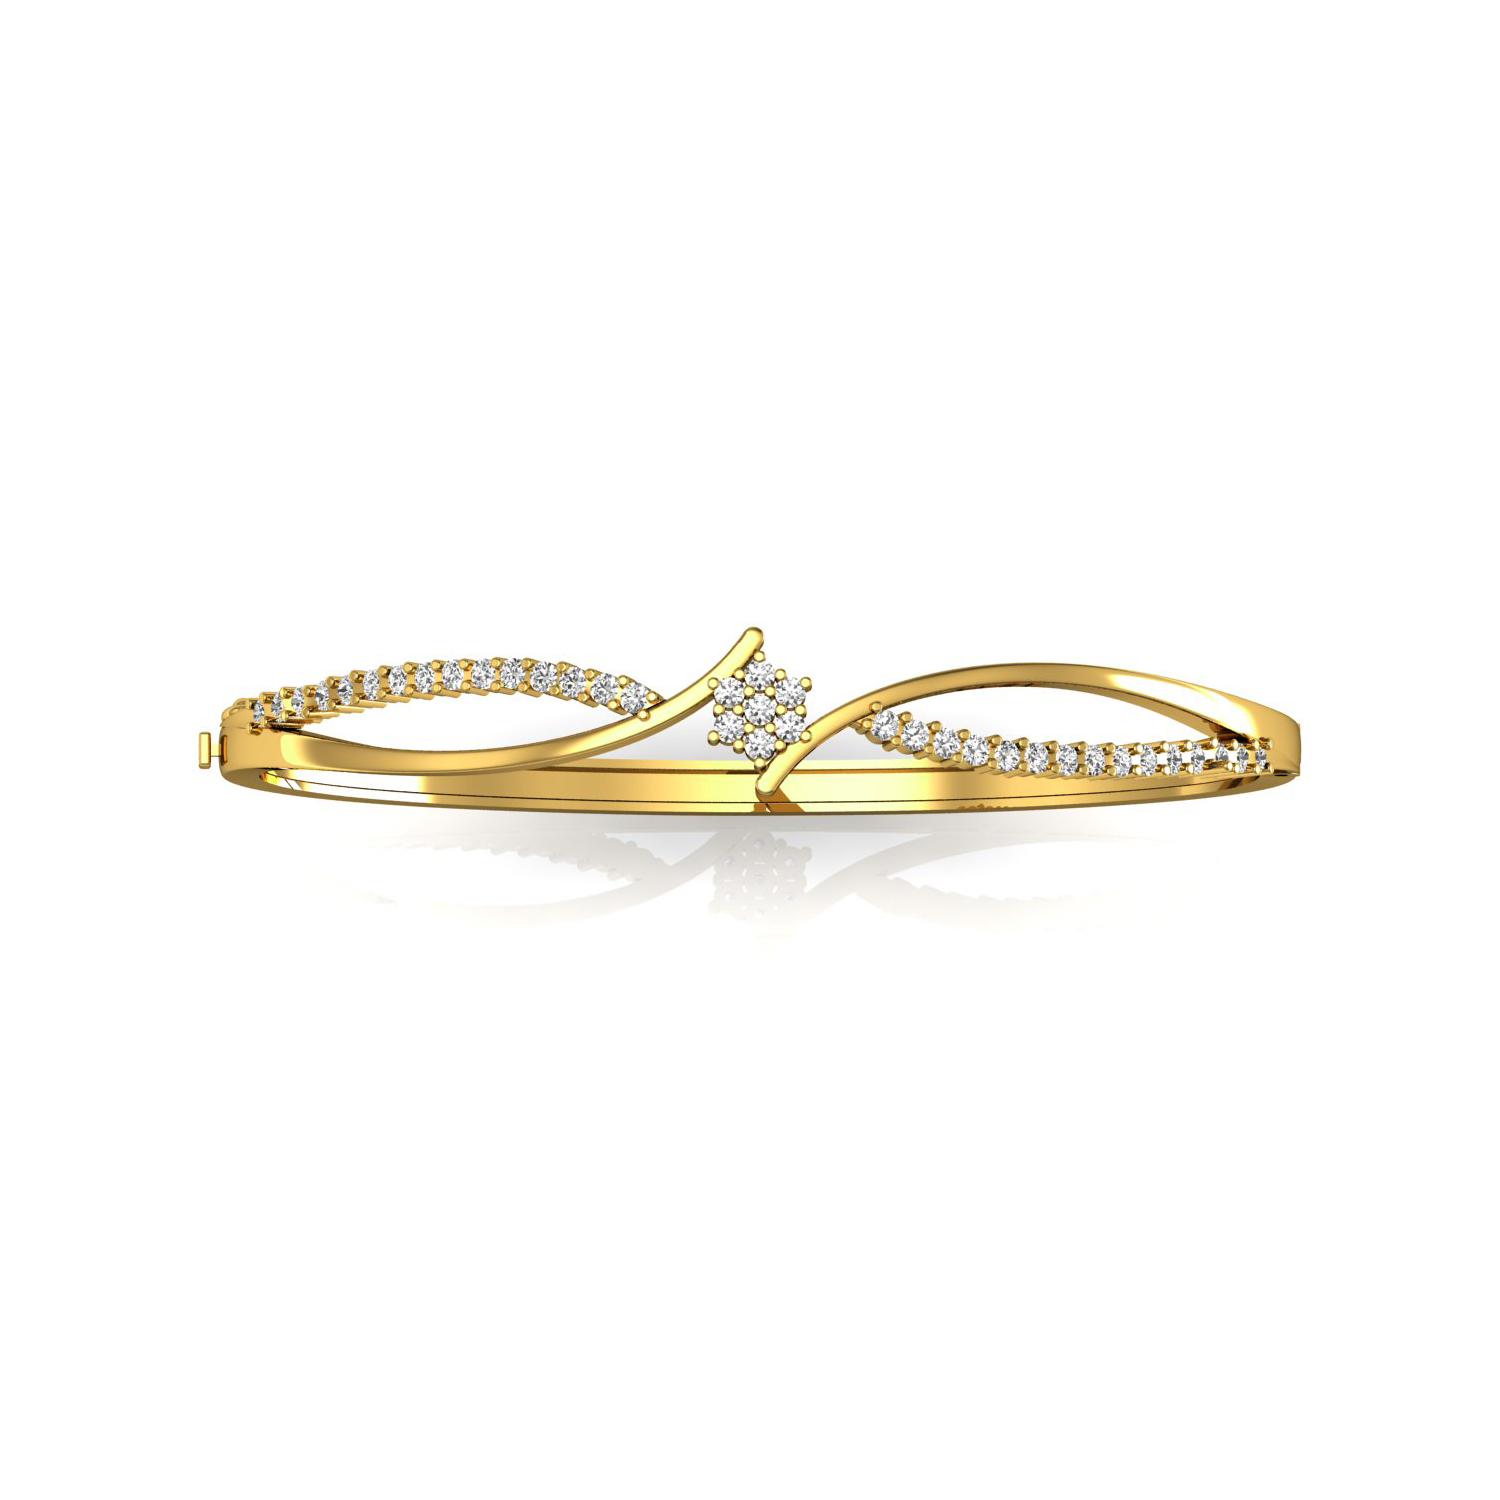 Bangle bracelet Made in solid gold & diamond